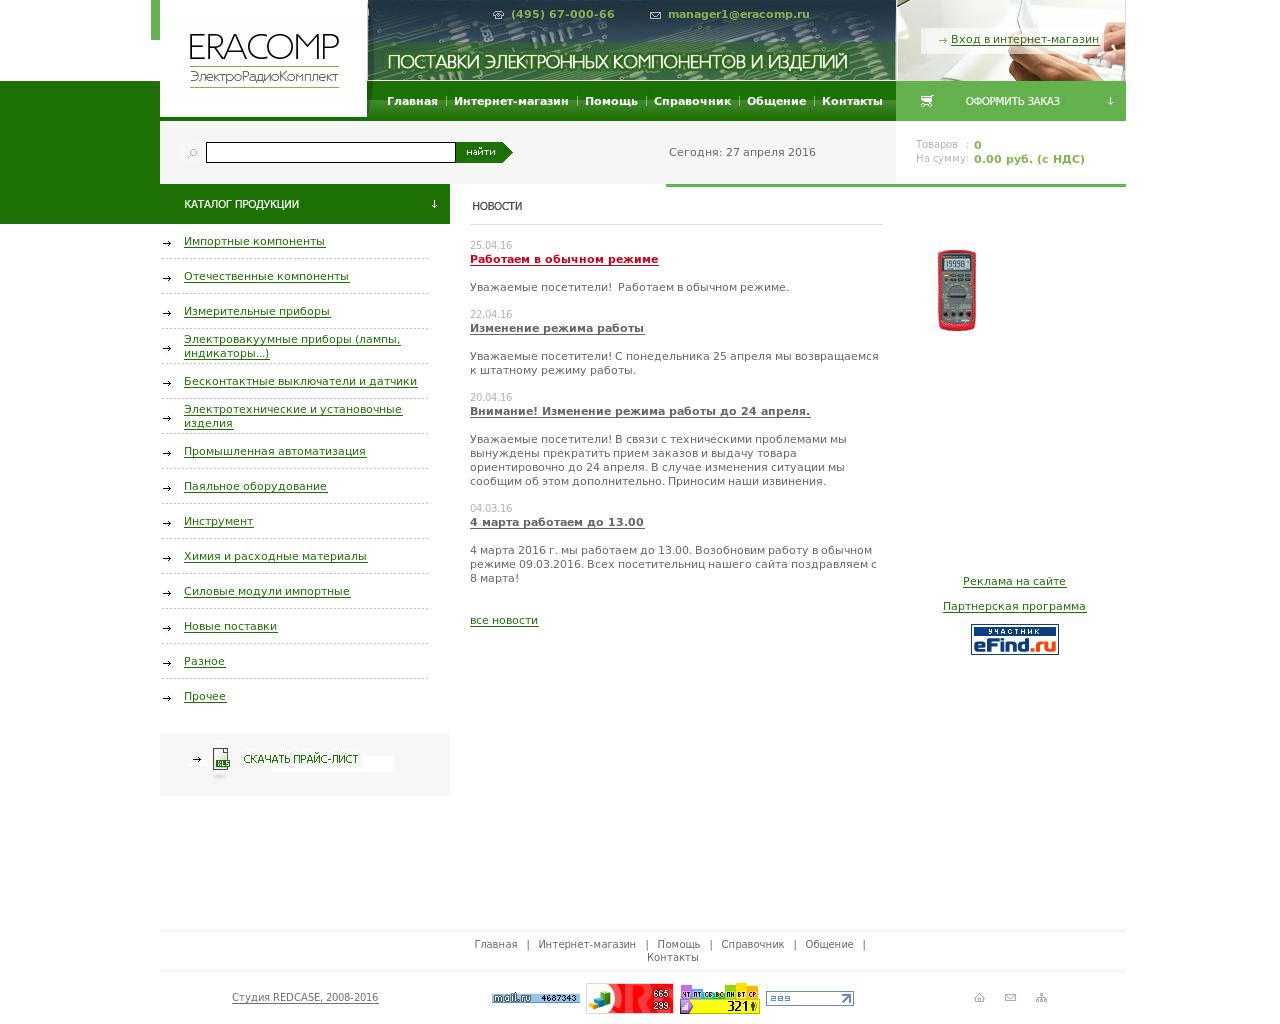 Изображение сайта eracomp.ru в разрешении 1280x1024